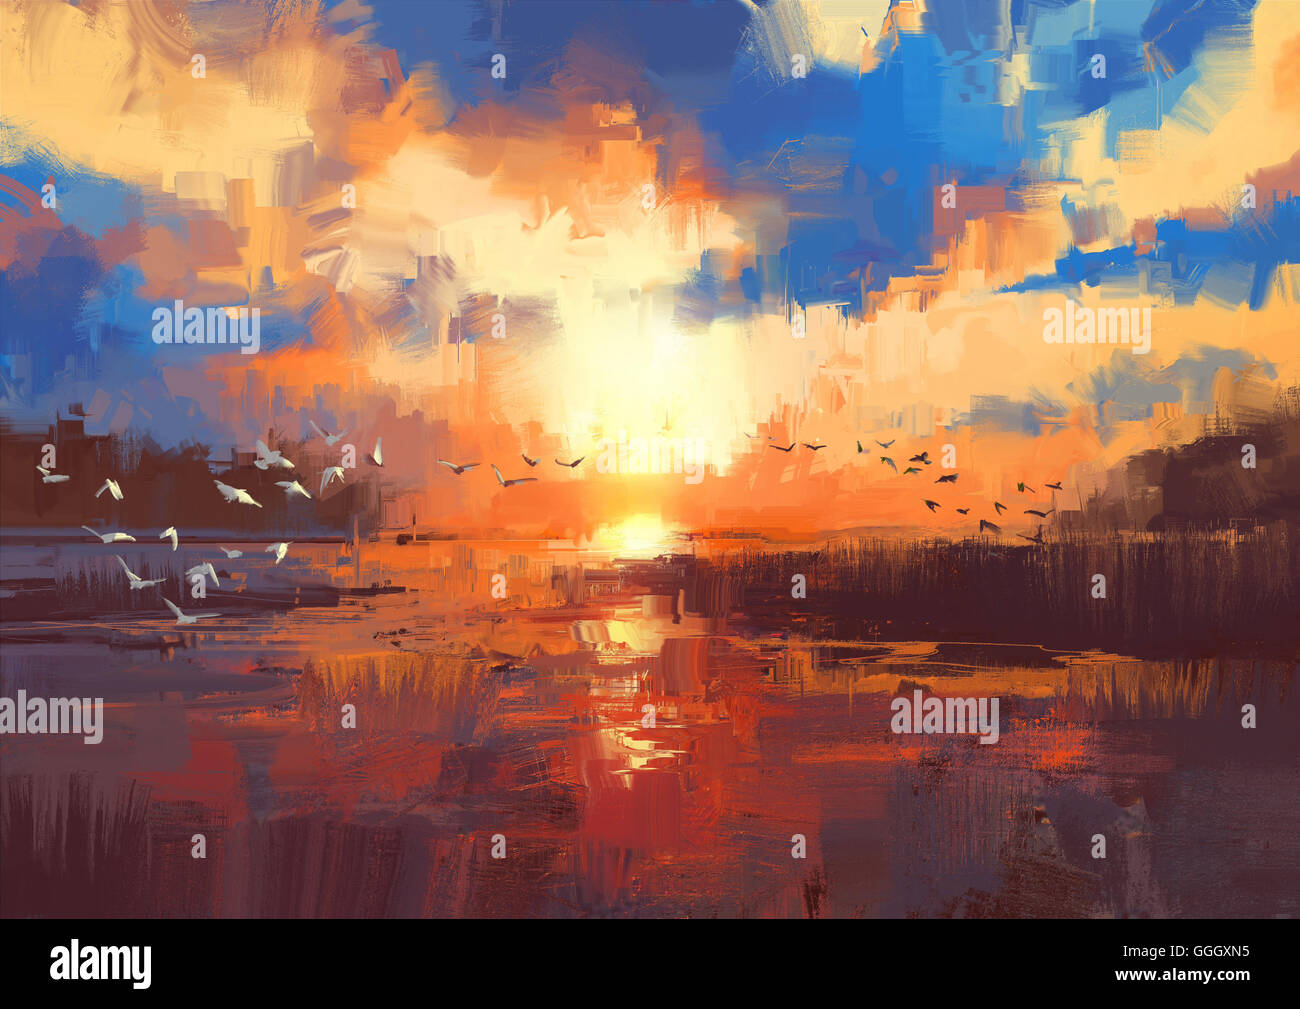 beautiful painting showing sunset on the lake,illustration Stock Photo